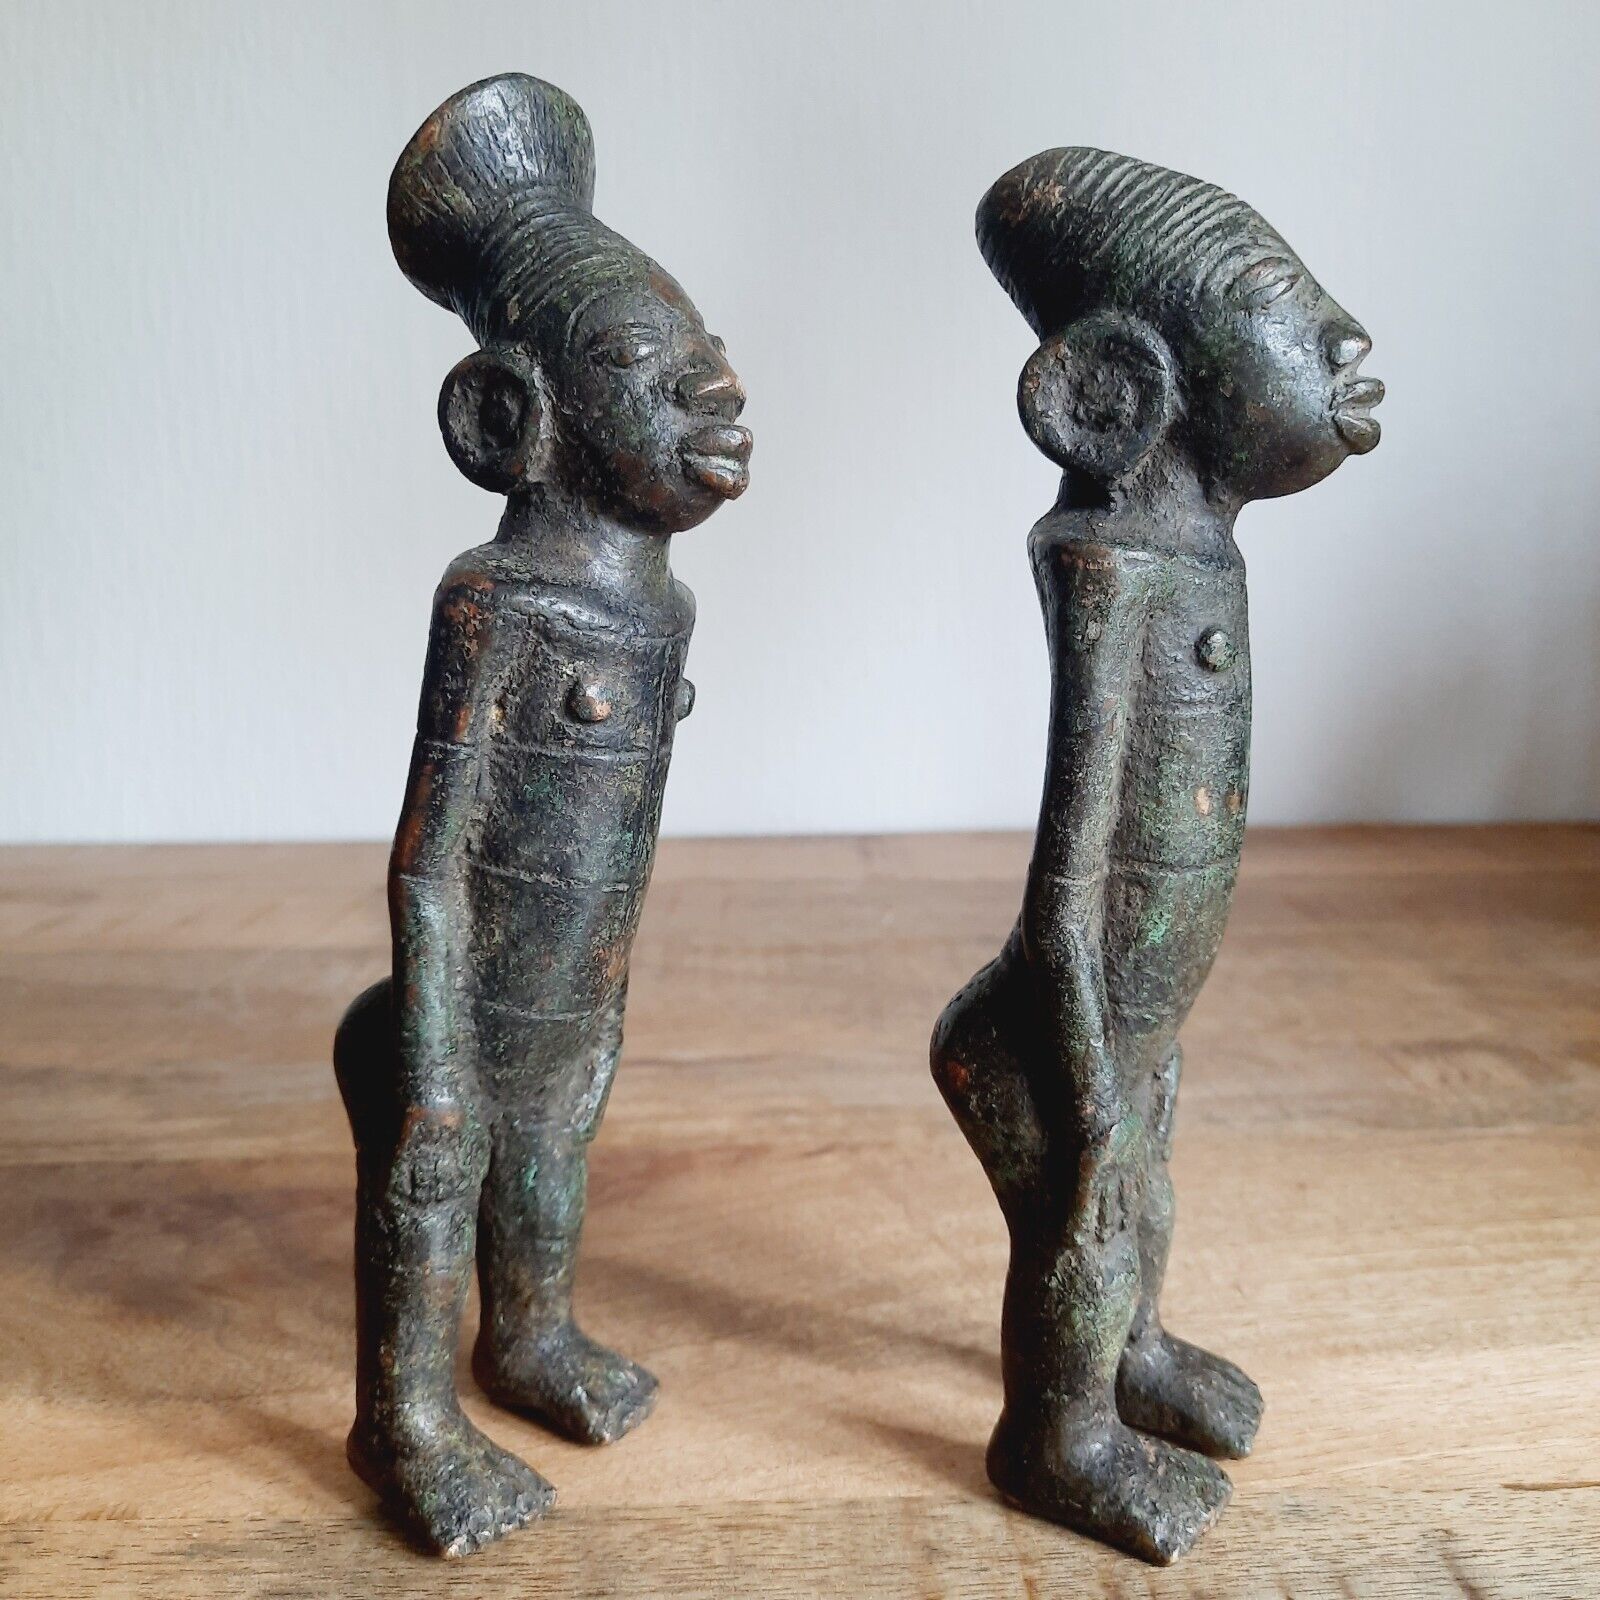 2 African Bronze Ancestor statues - MANGBETU, D.R. Congo TRIBAL ART CRAFTS